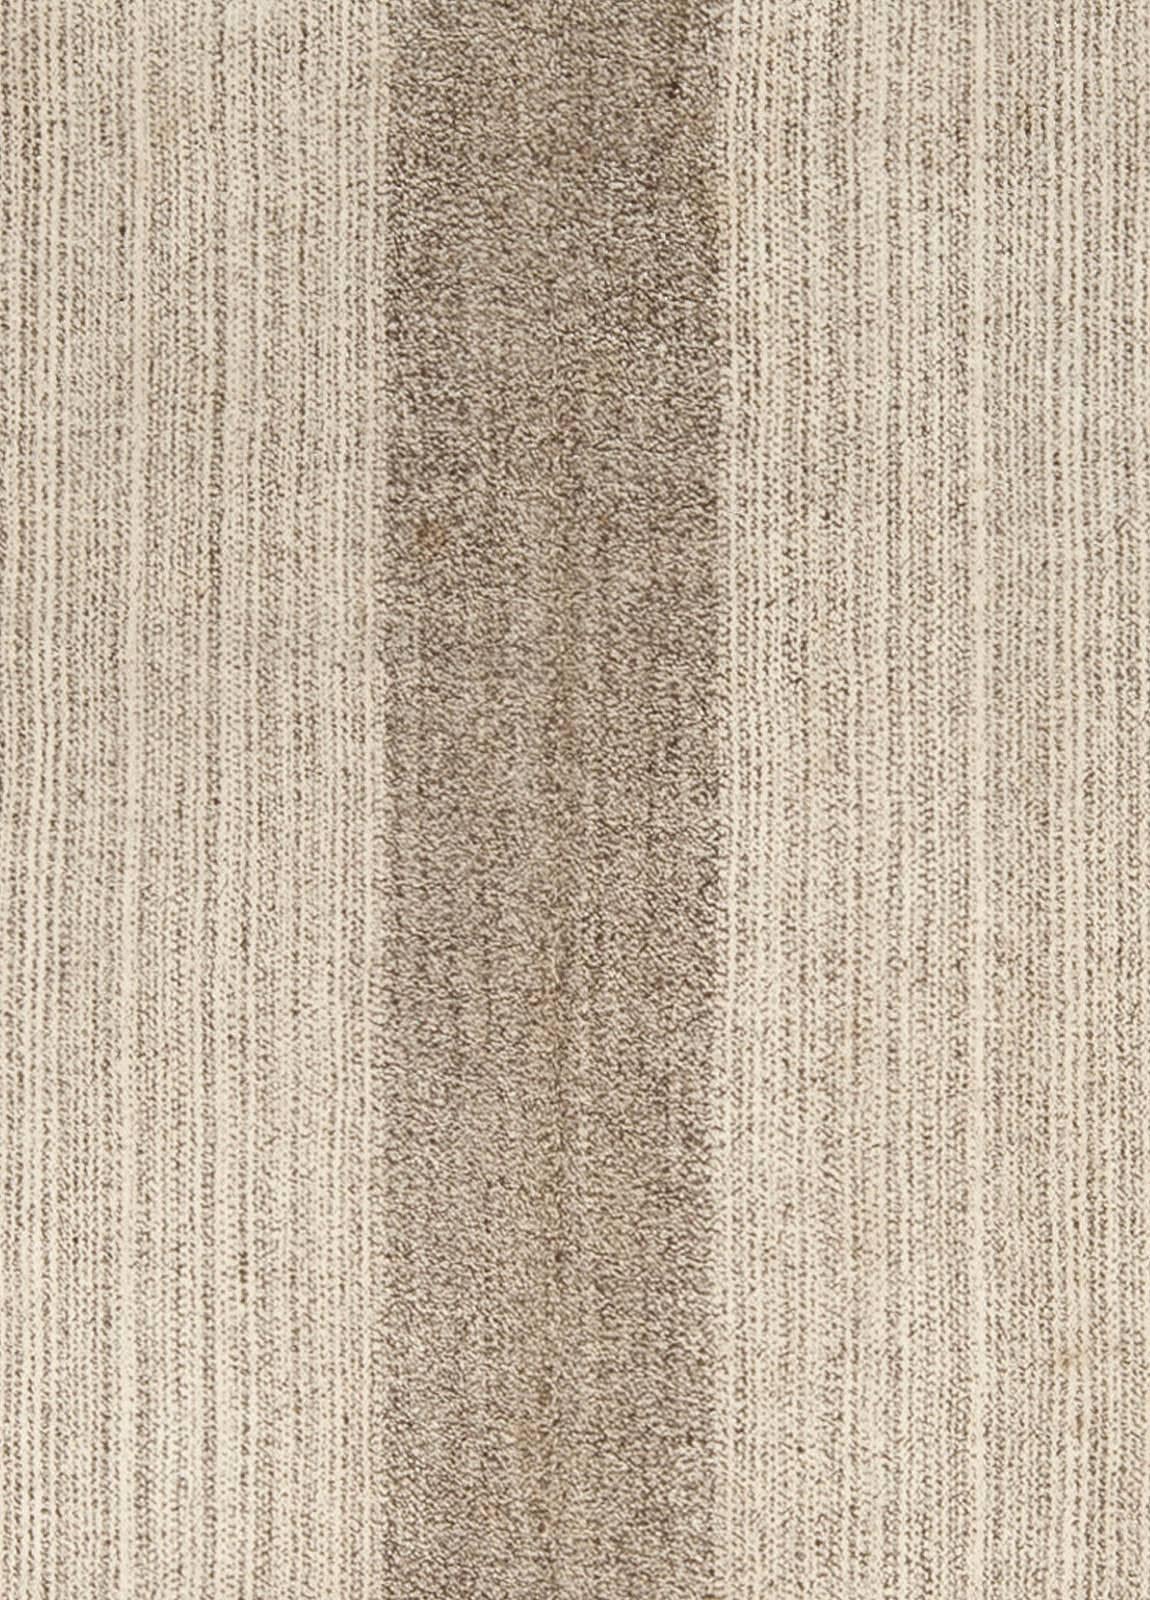 Contemporary beige and brown Persian Kilim wool rug by Doris Leslie Blau.
Size: 7'8